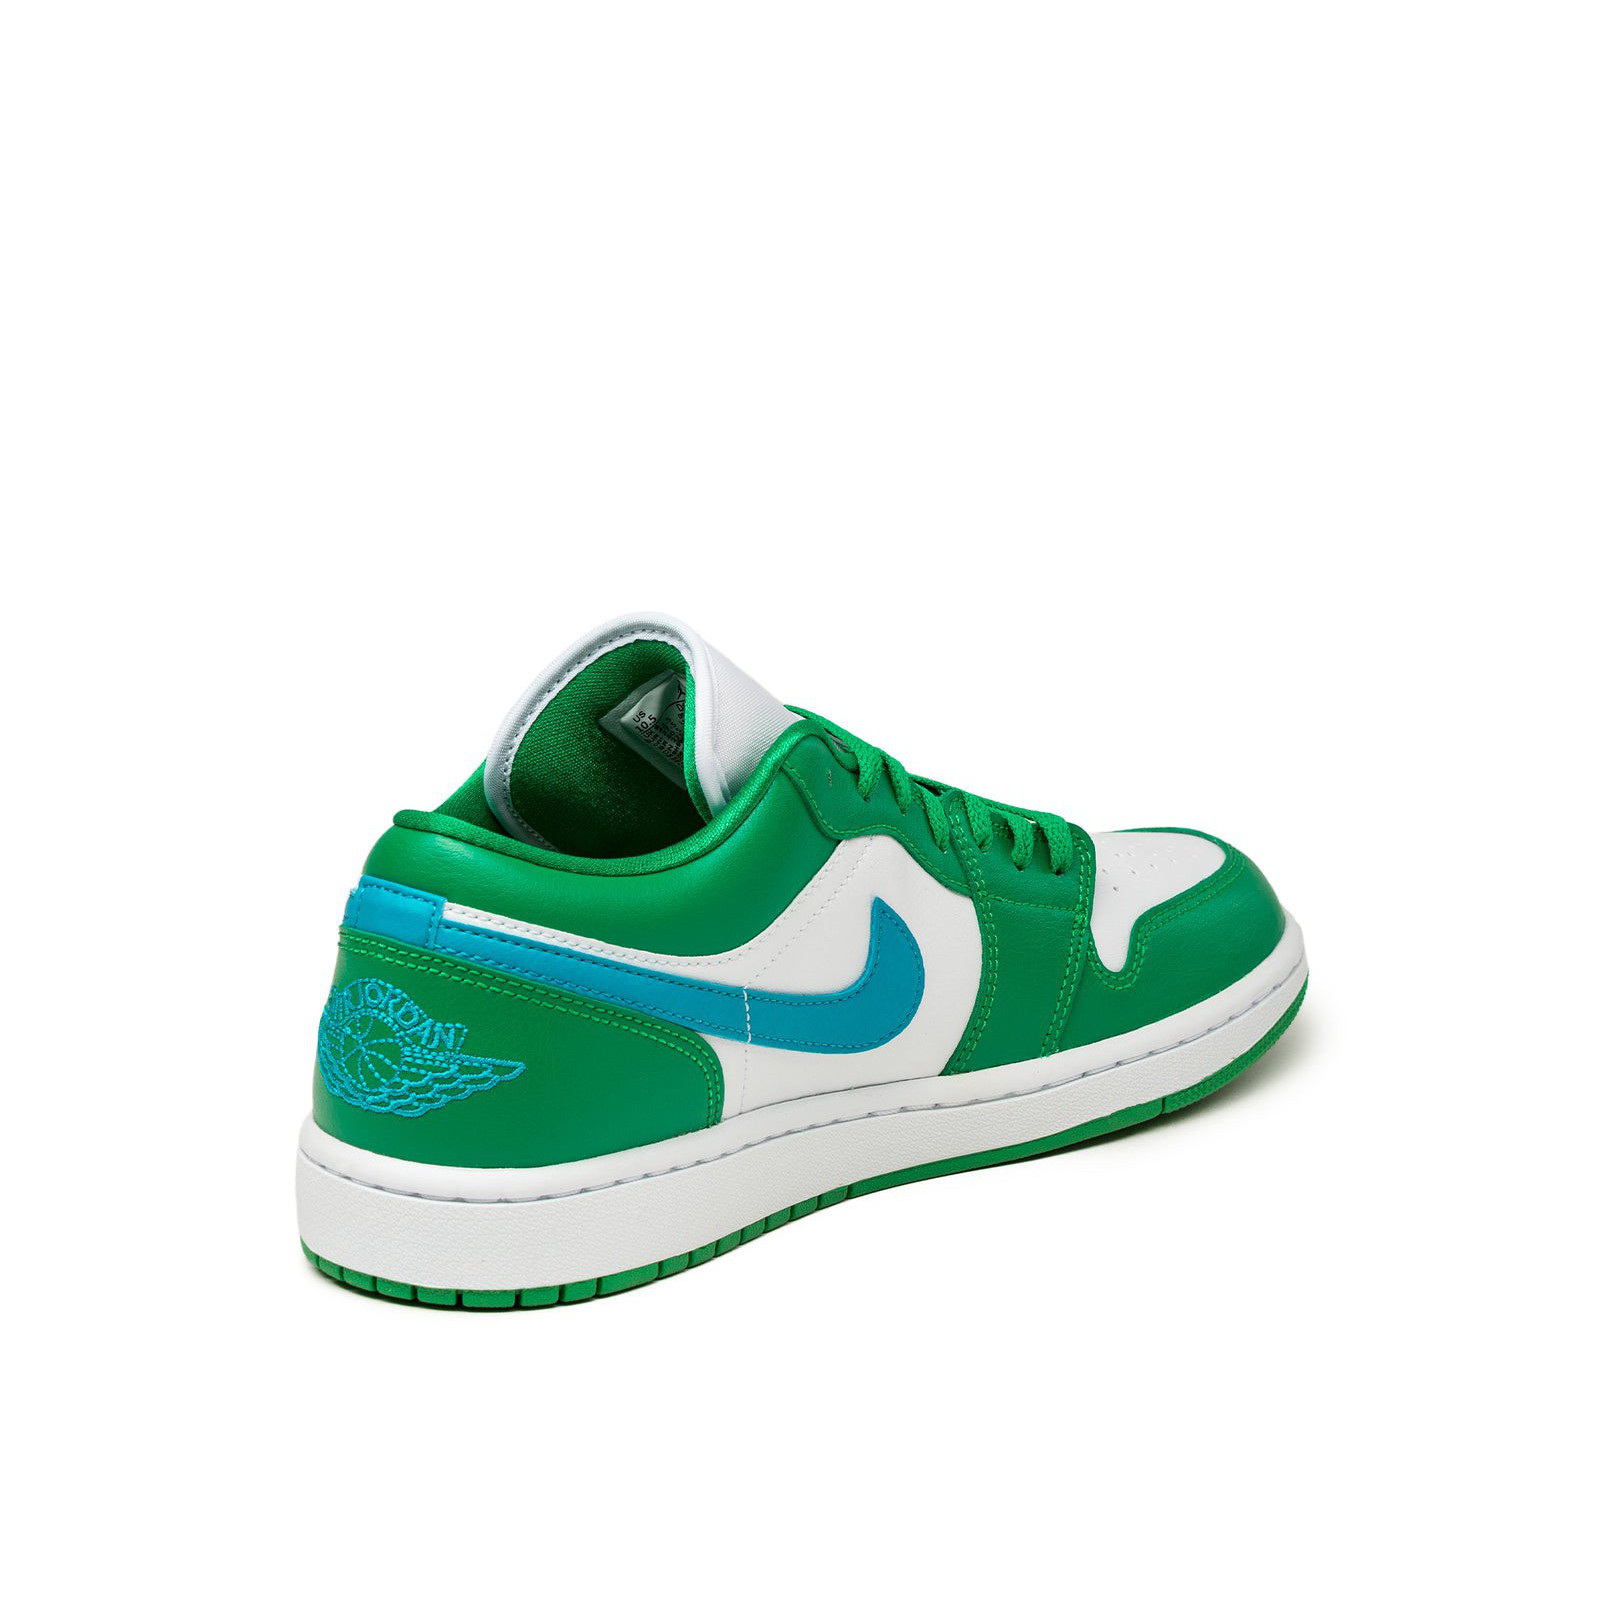 Nike Air Jordan 1 Low
« Lucky Green »